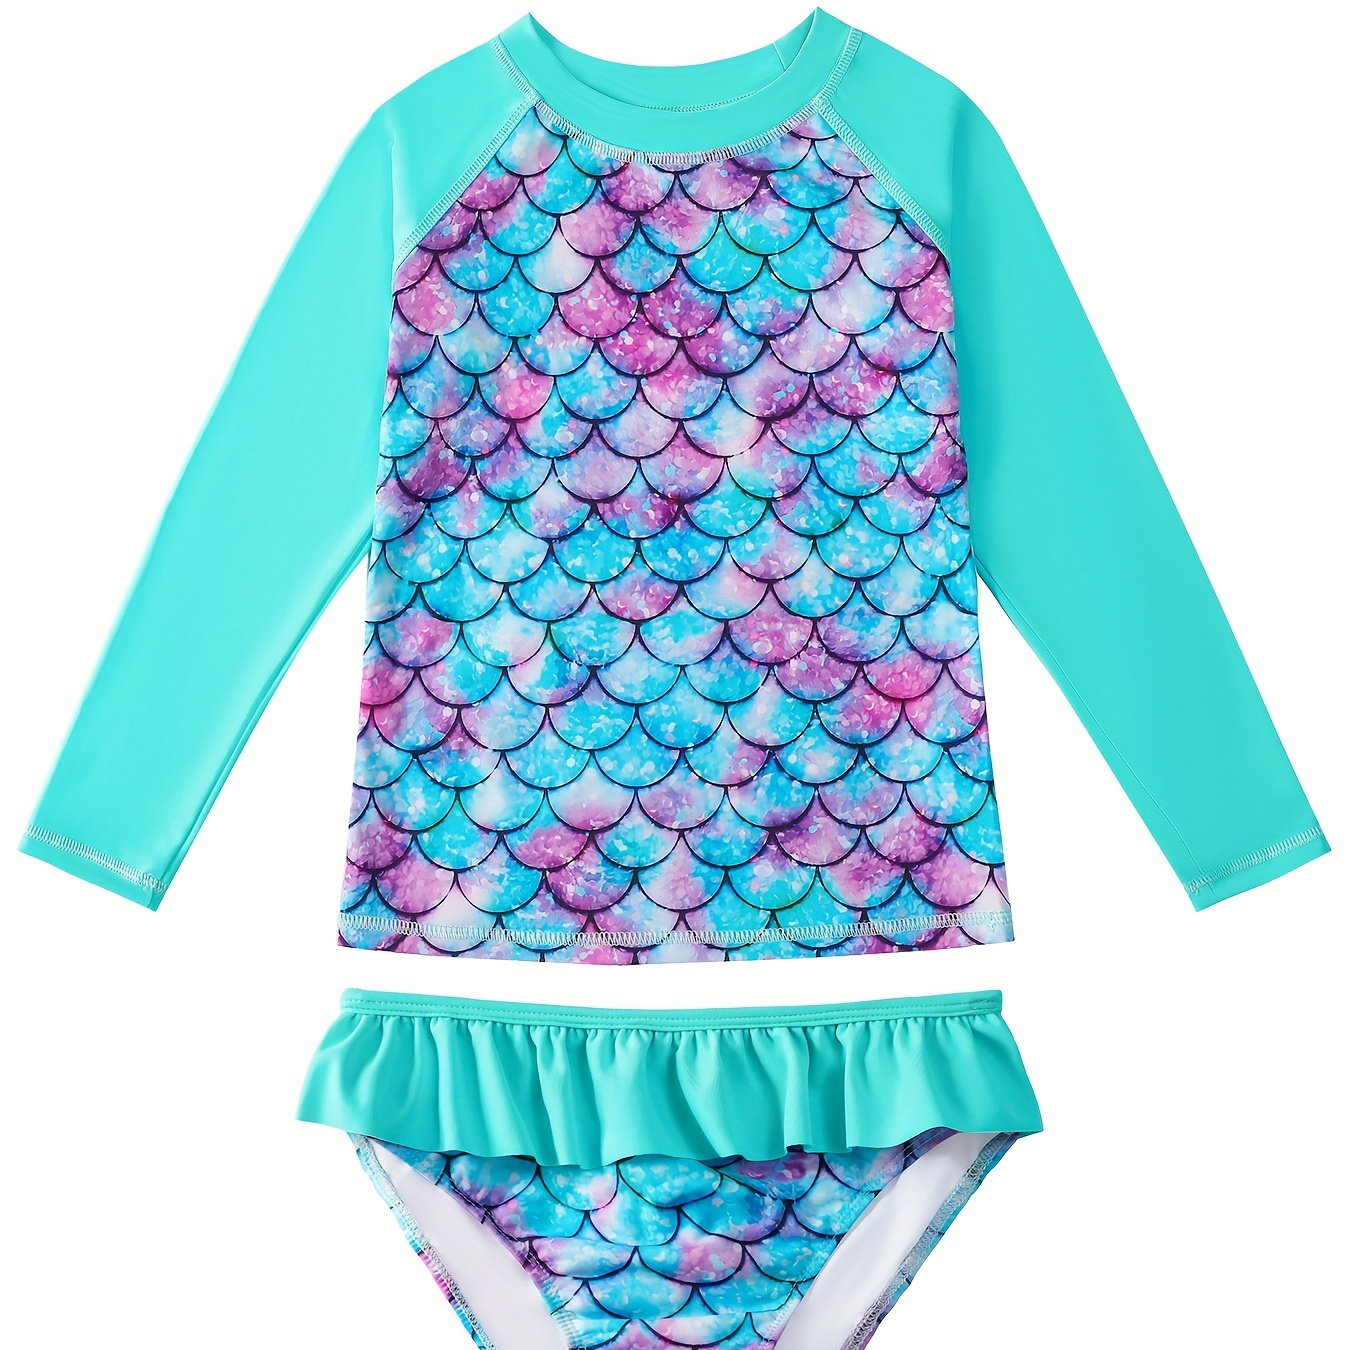 

Girls' 3d Printed Mermaid Bikini Long-sleeved Sunscreen Beach Swimsuit - Perfect For Summer Splashing!